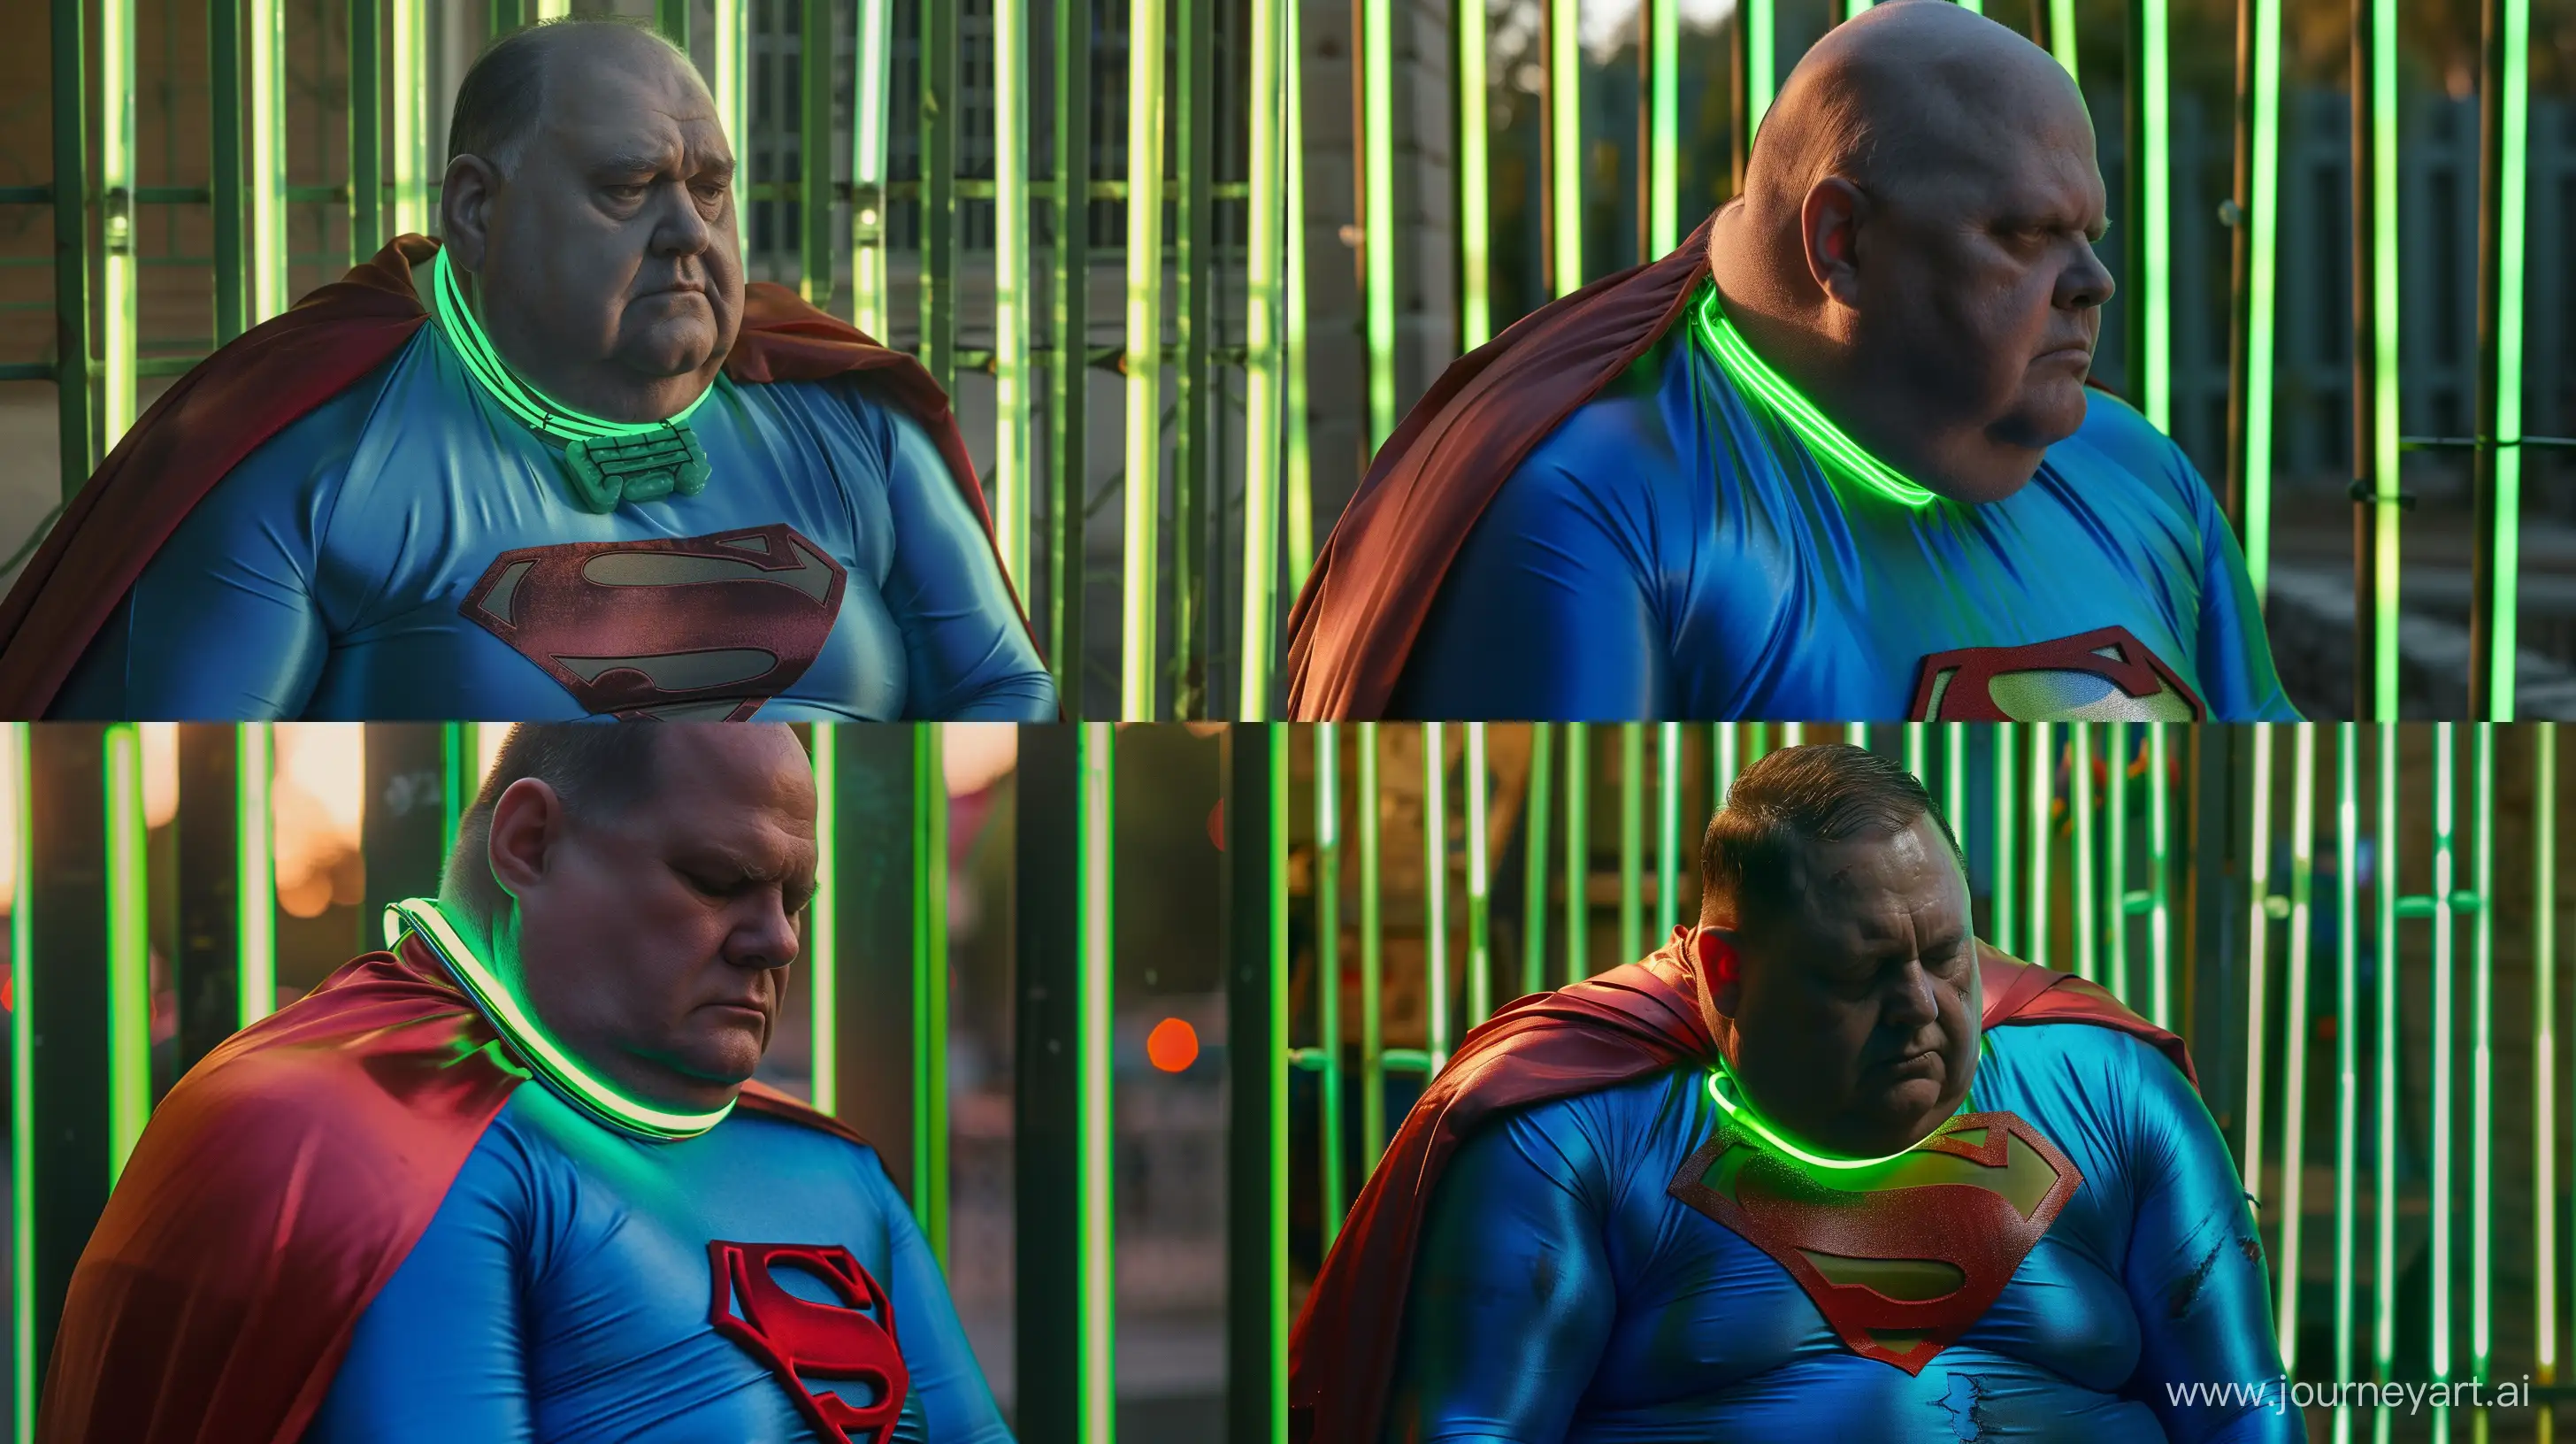 Elderly-Superhero-in-Vibrant-Neon-Costume-Relaxing-Outdoors